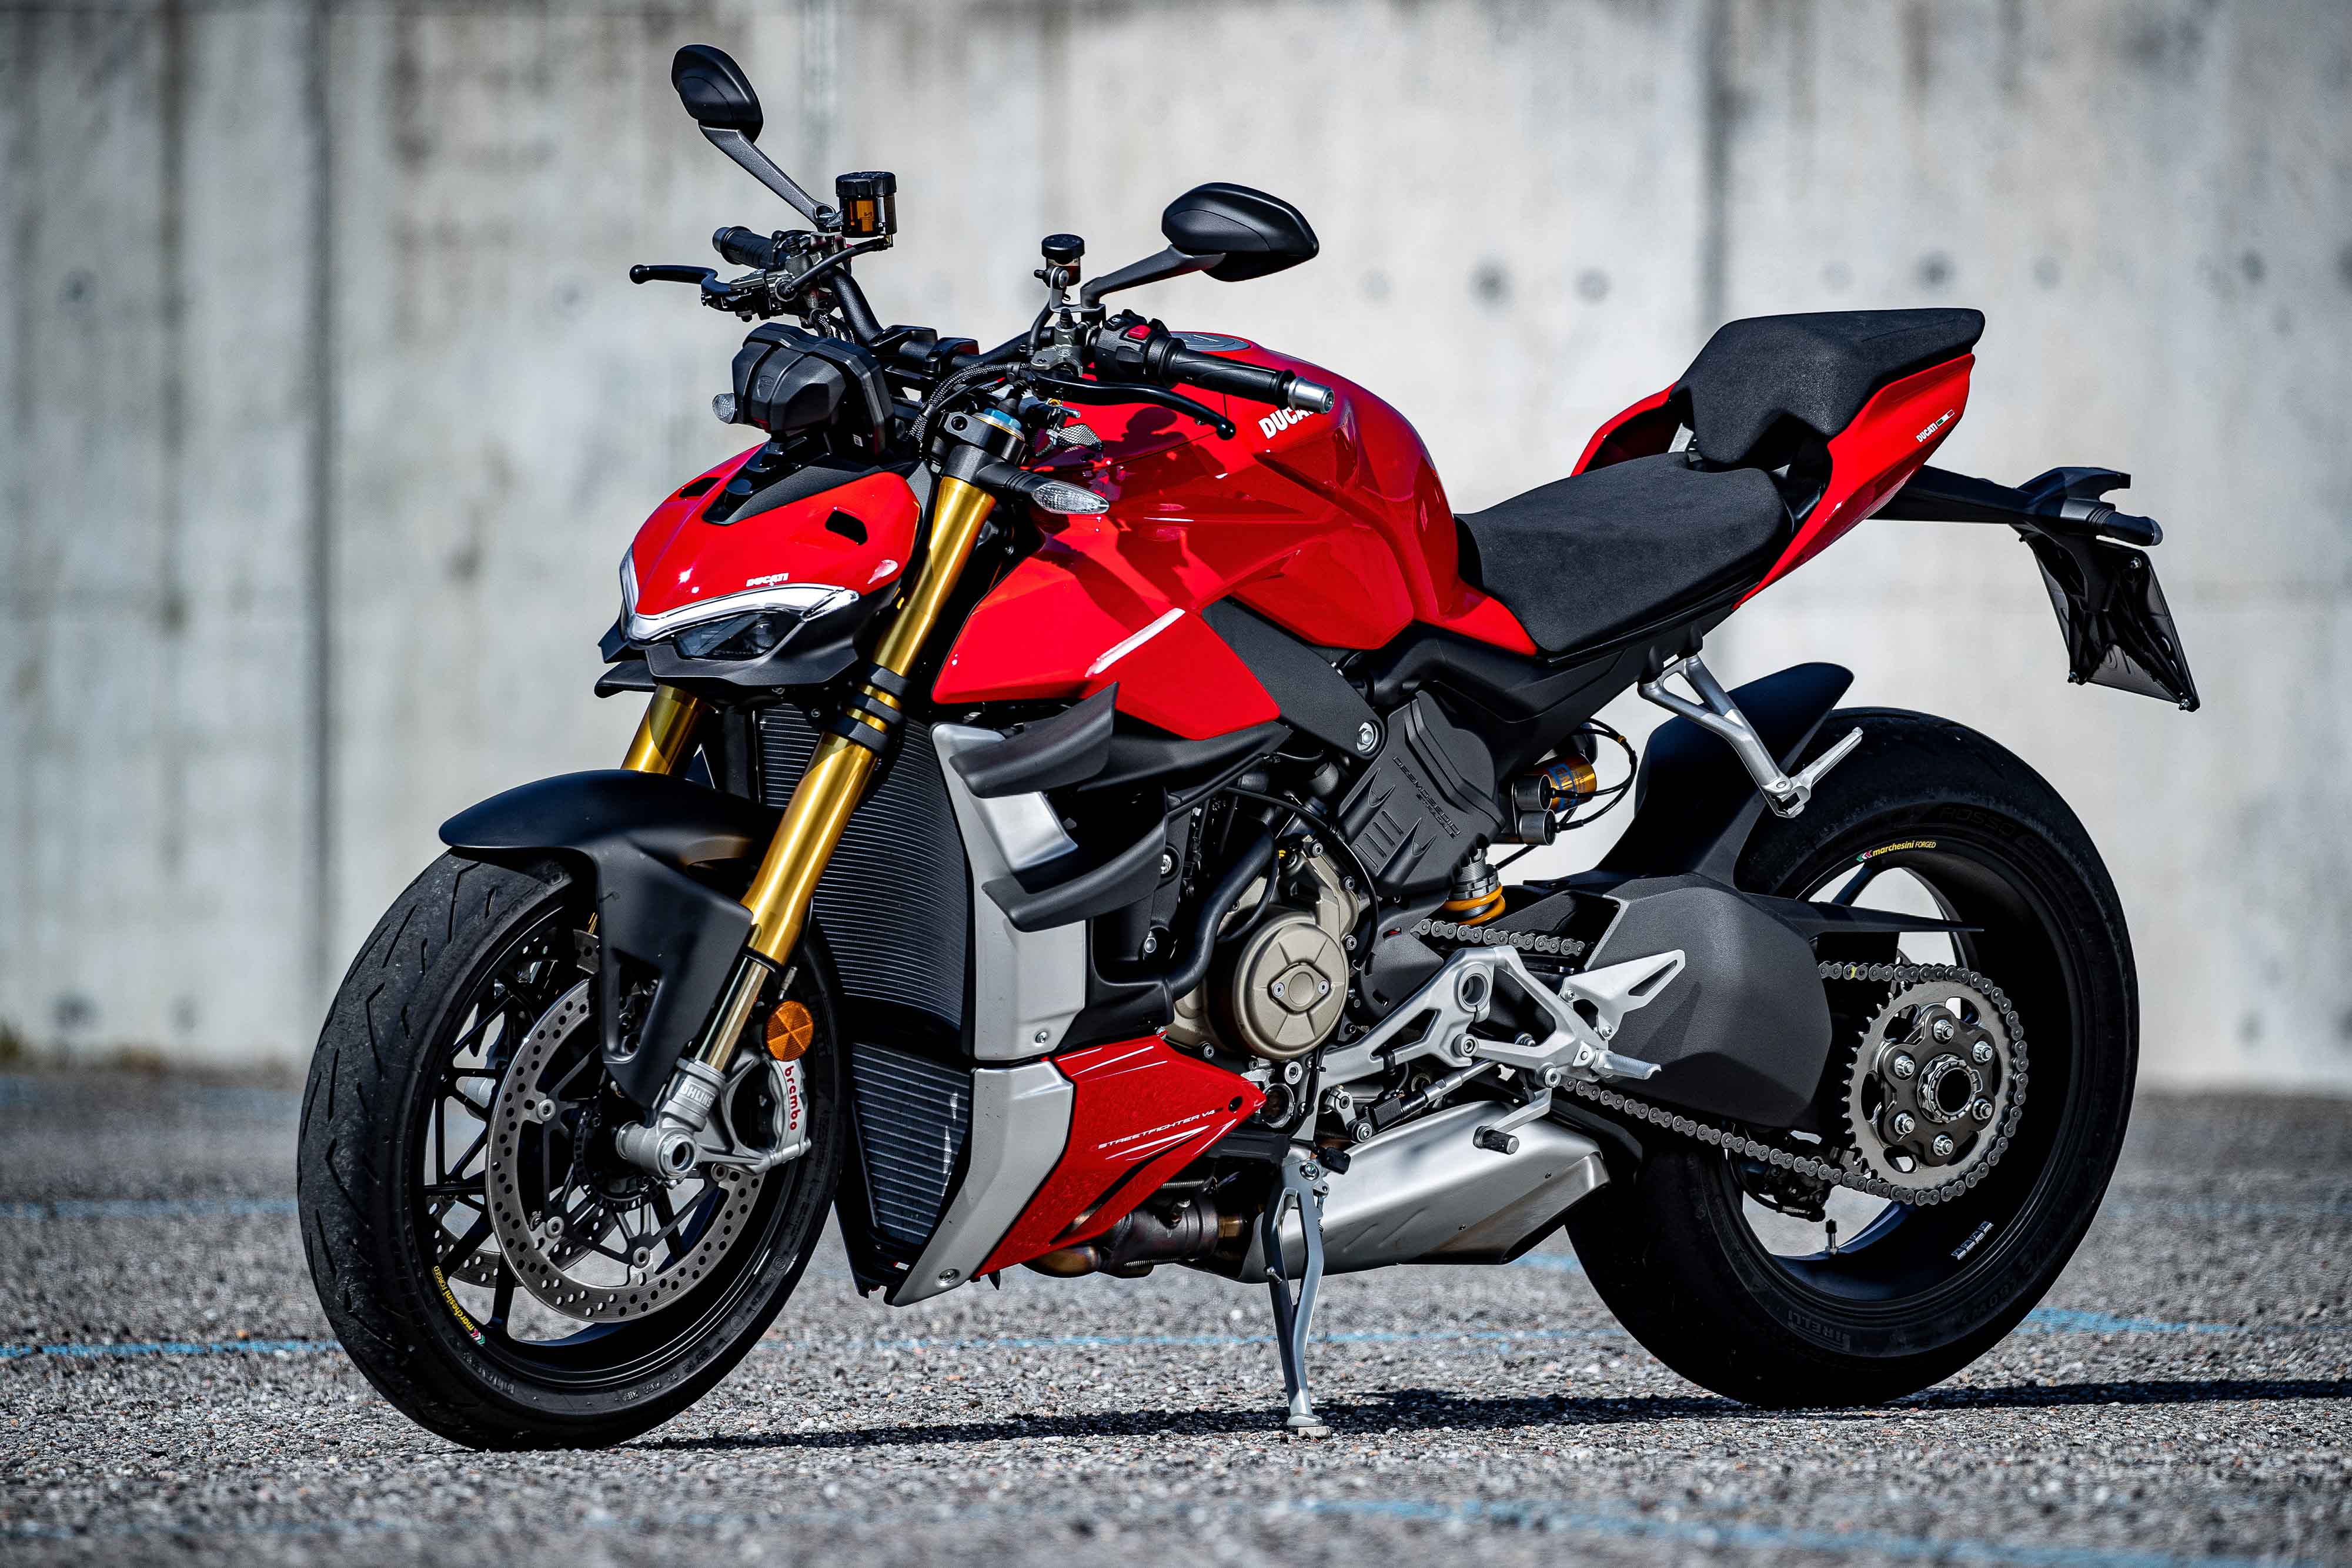 Zastaki.com - Красный быстрый новый мотоцикл Ducati V4 Streetfighter, 2021 года